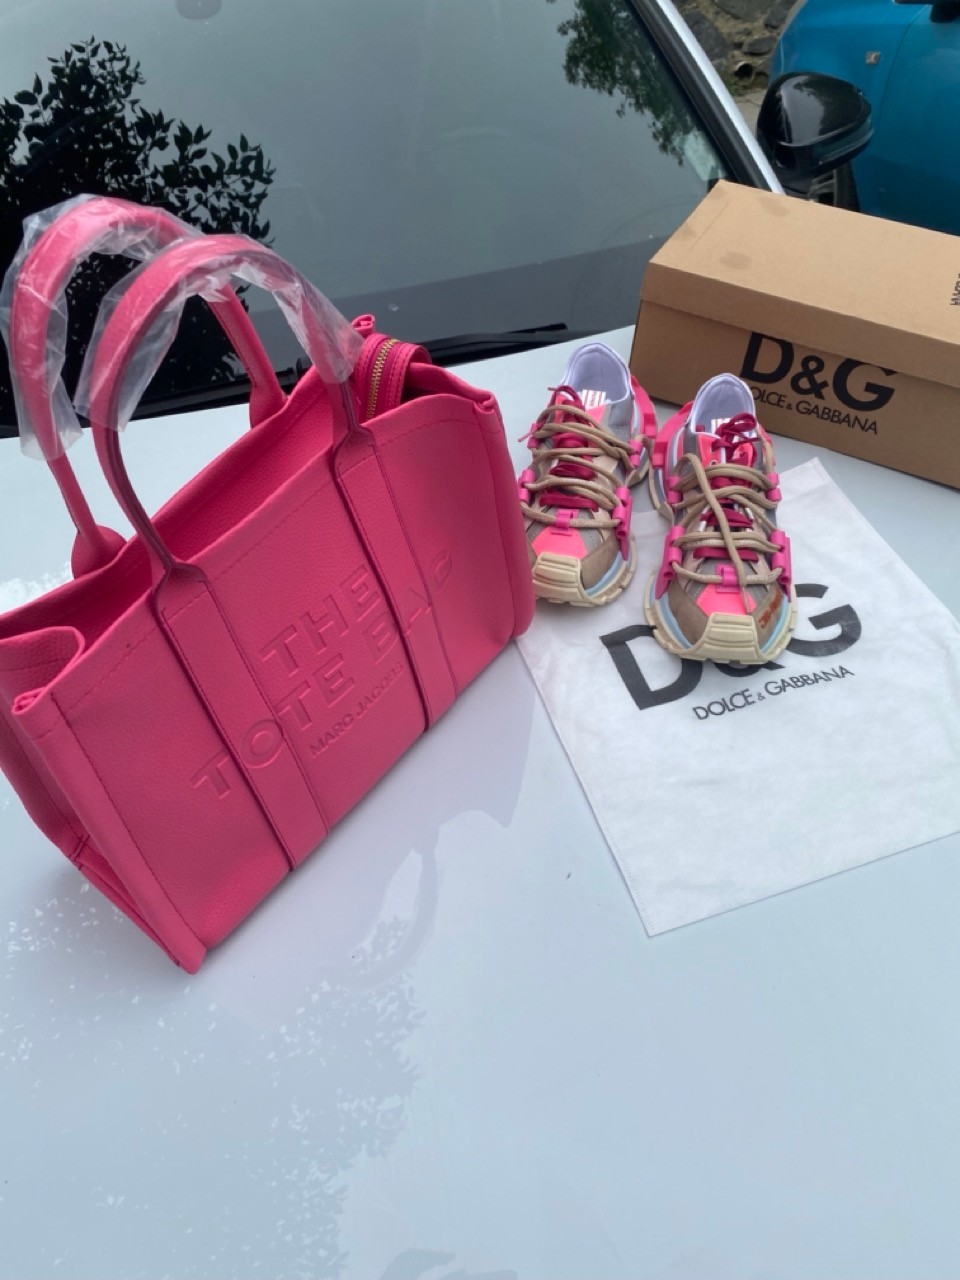 Pink DG & Pink Marc Jacobs Tote Bag